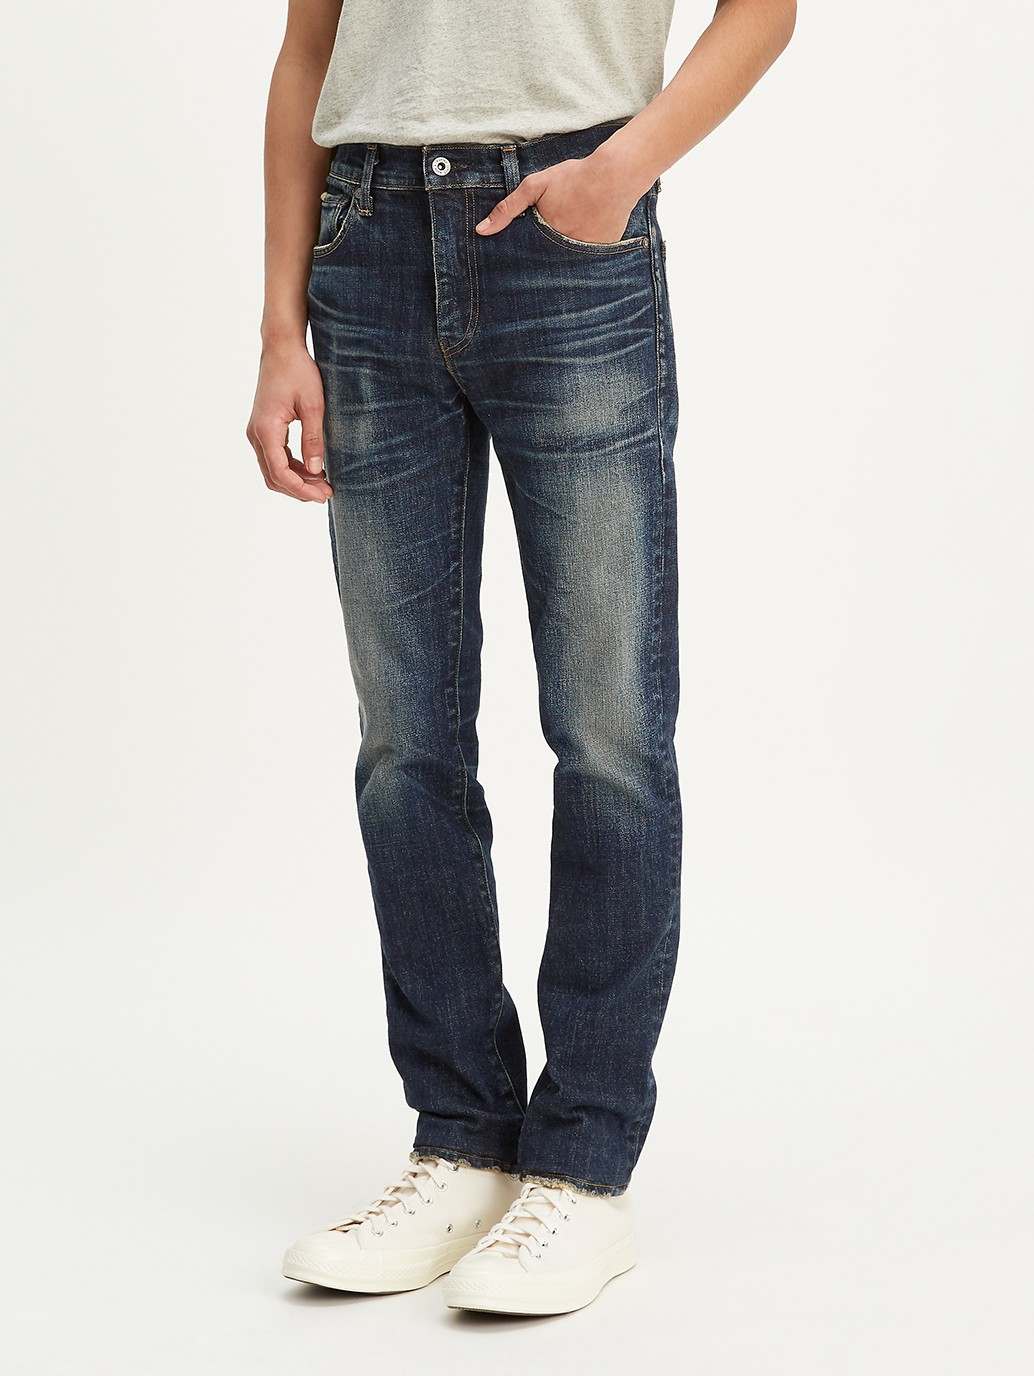 levi's 505 regular fit jeans